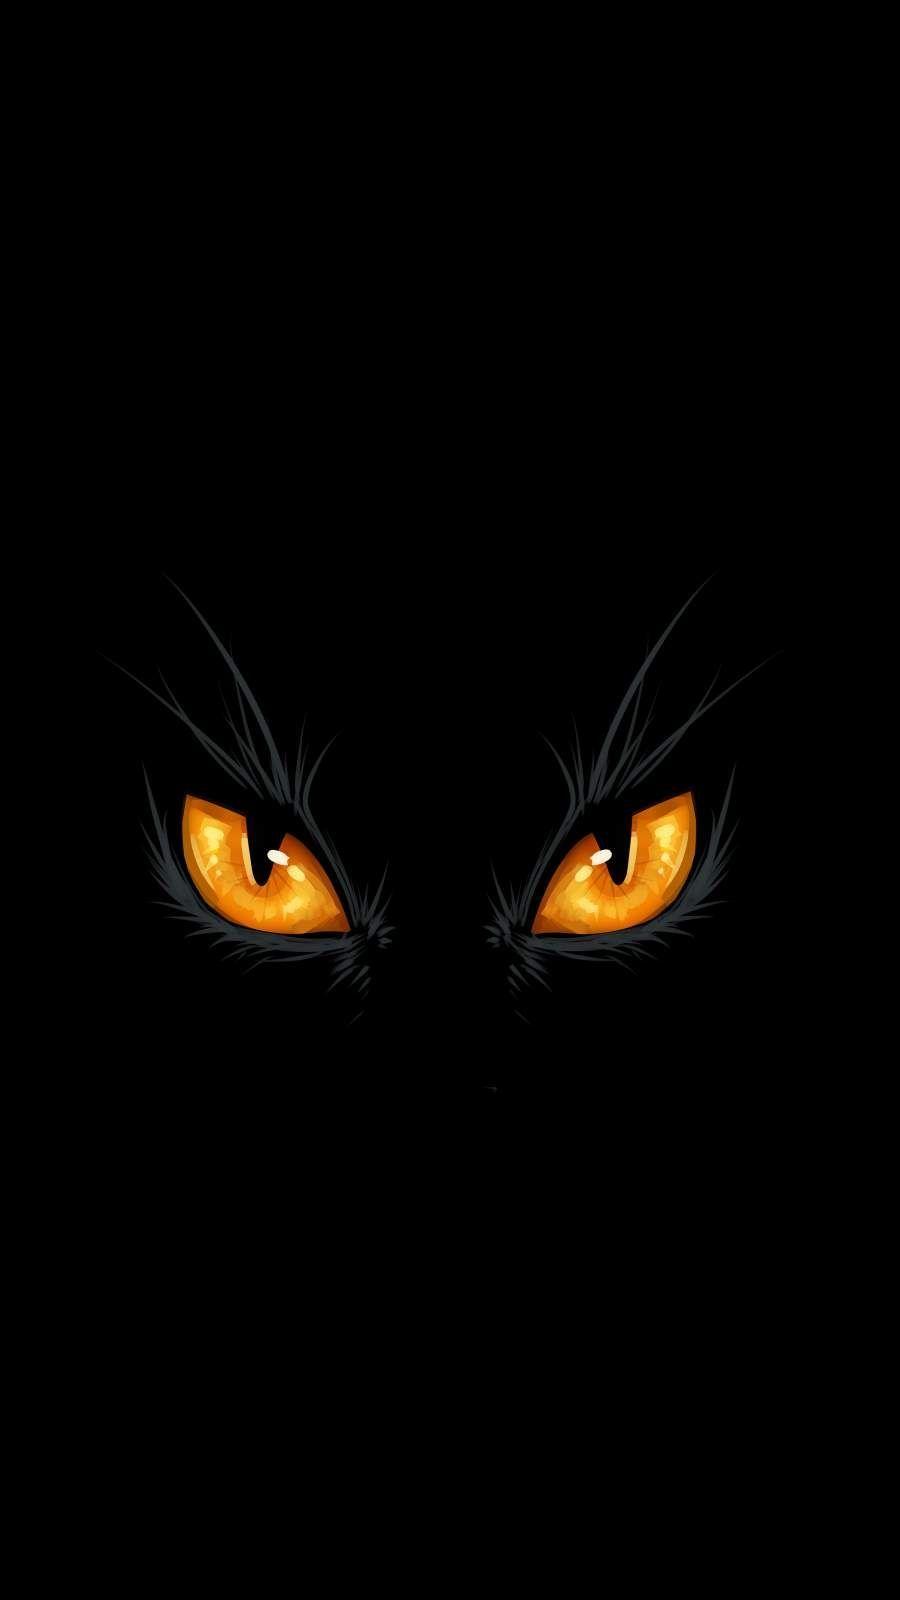 Black Cat Eyes Wallpapers - Top Free Black Cat Eyes Backgrounds